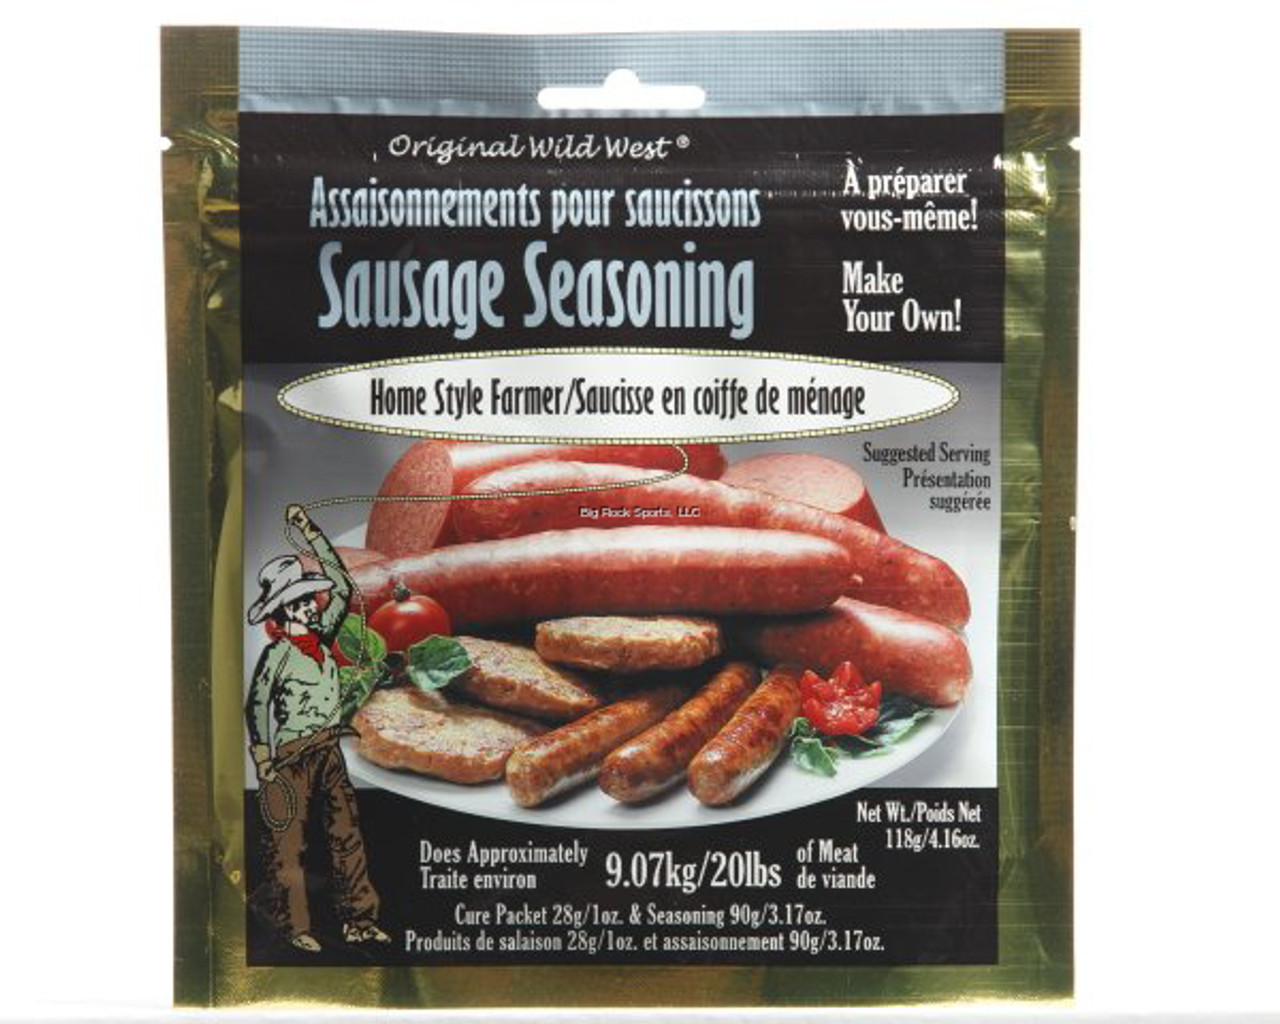 Wild West Sausage Seasoning Home Style Farmer